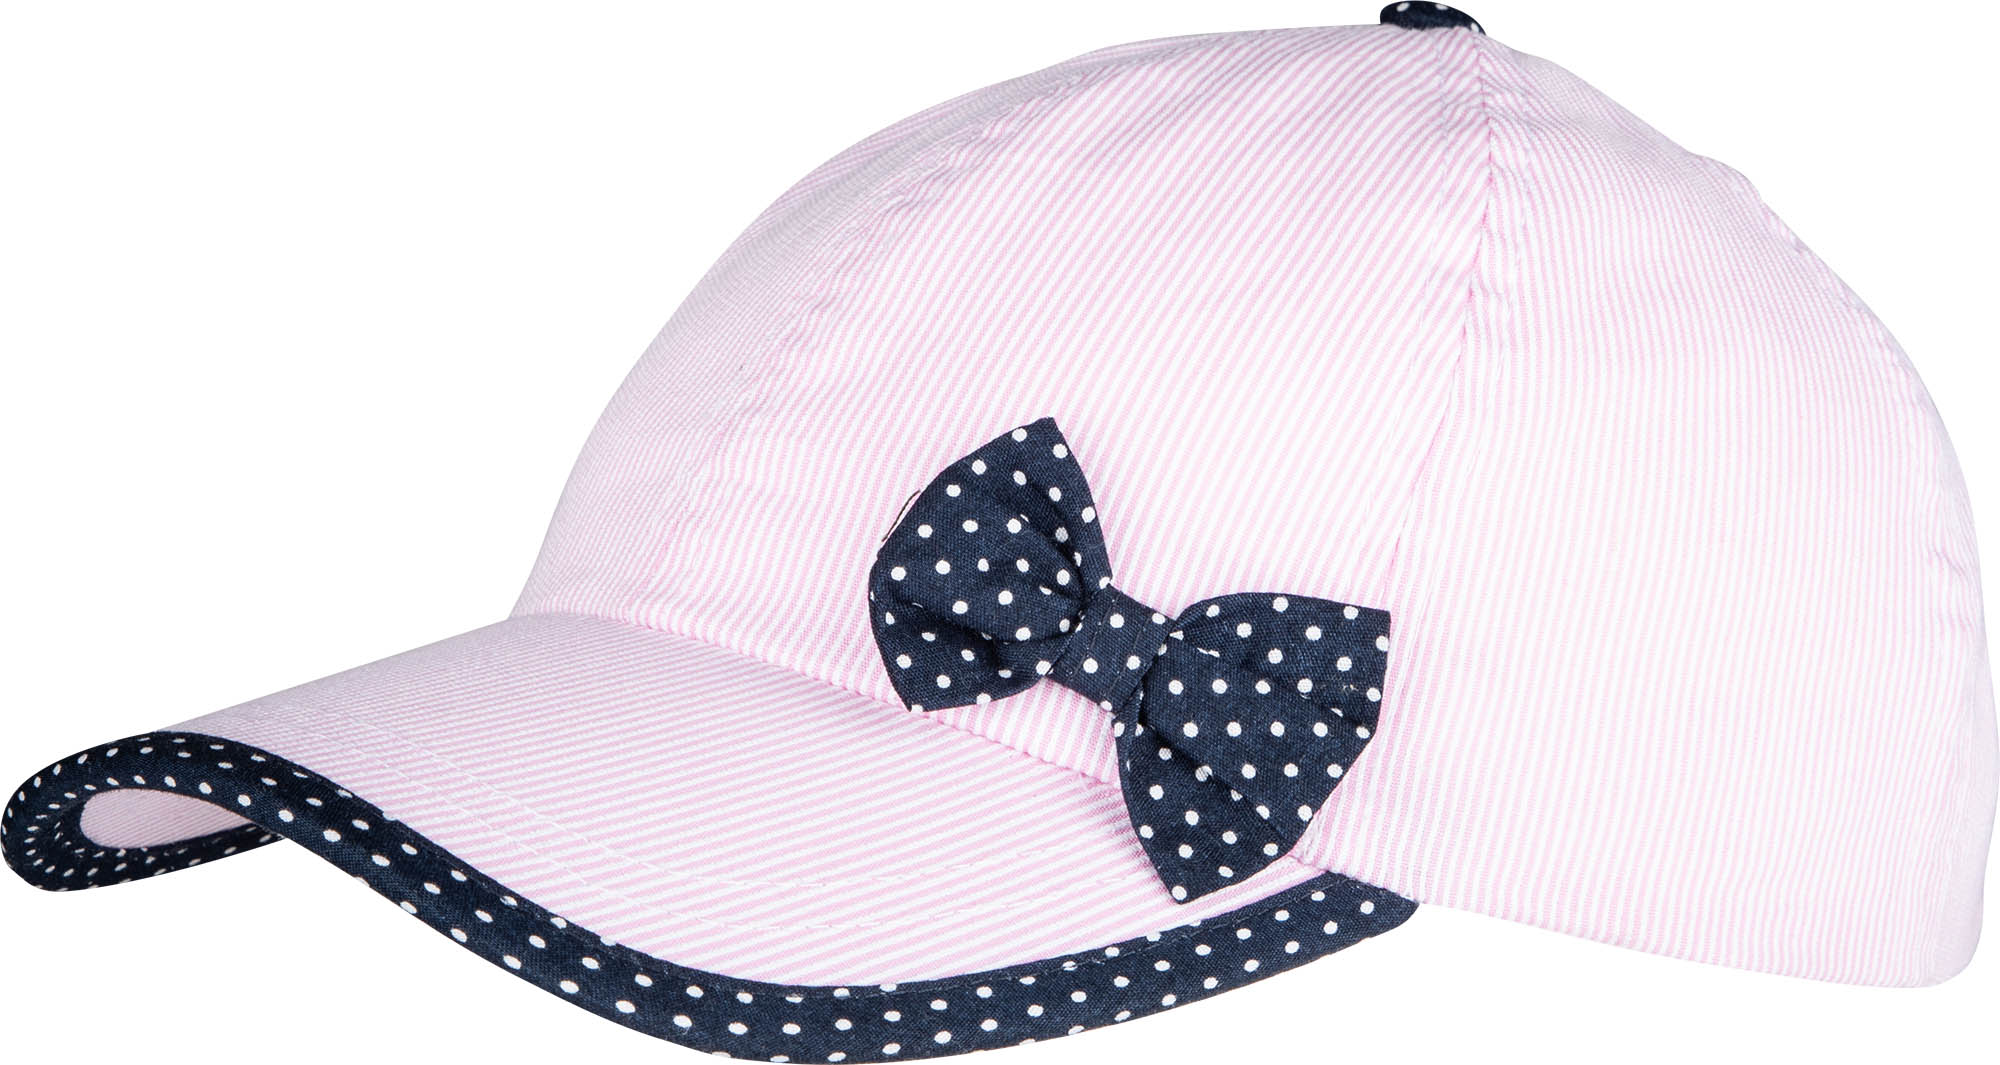 Girls' baseball cap